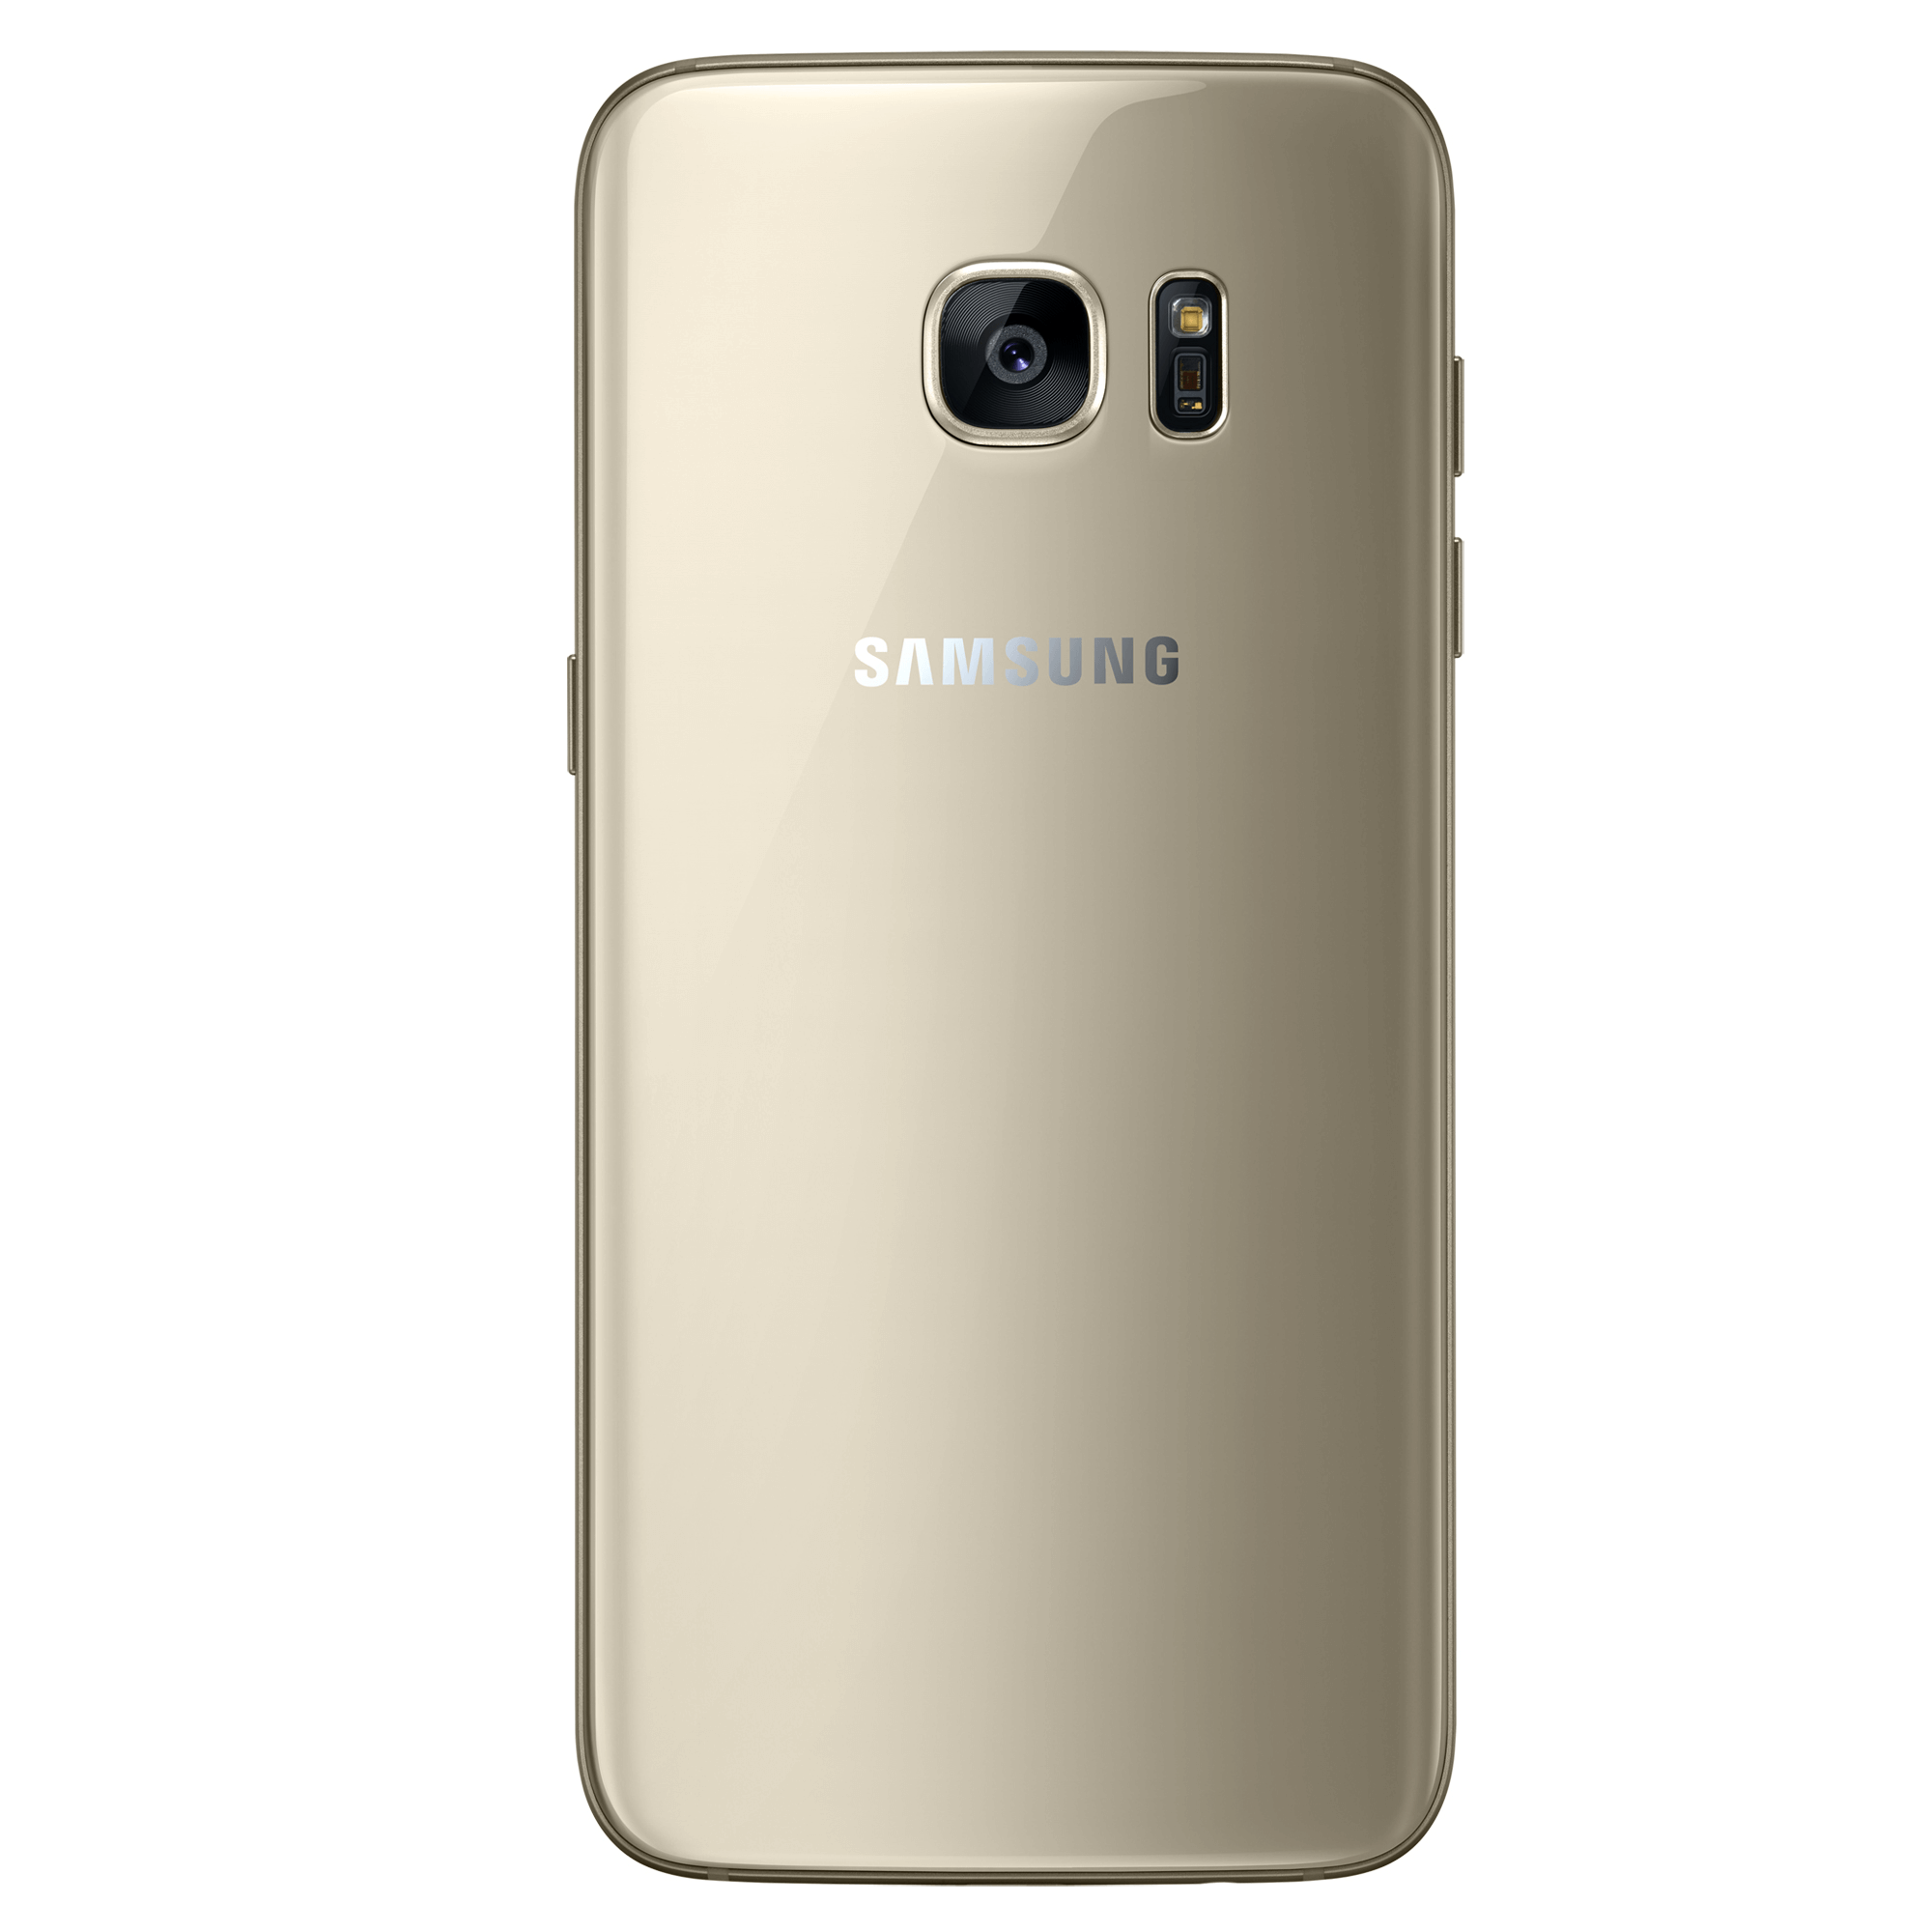 entiteit voorkomen winkelwagen Samsung Galaxy S7 Edge achterkant - Repair IT Now